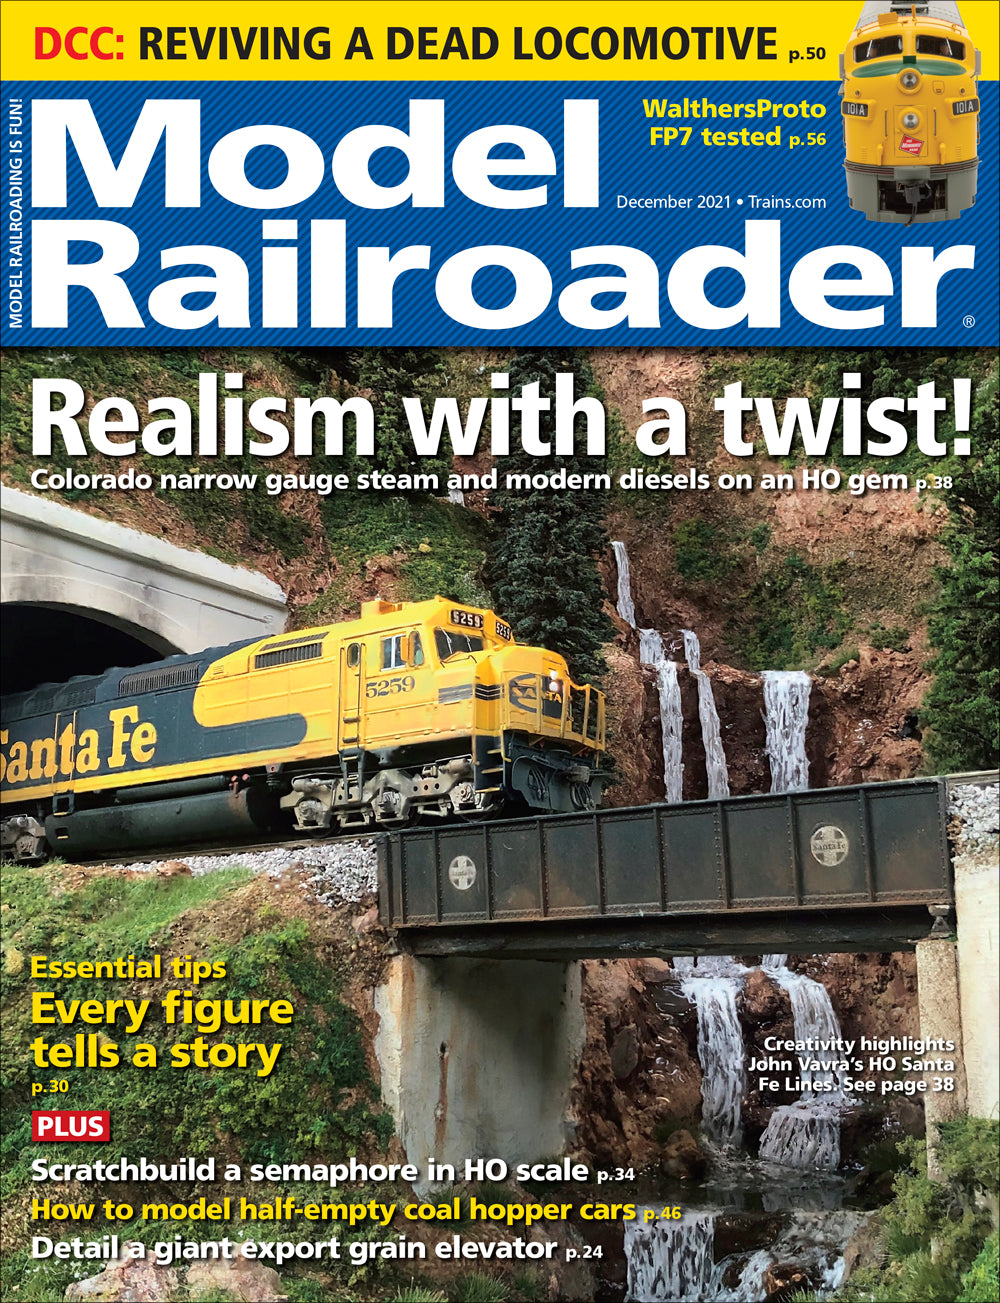 Model Railroader - Magazine - Vol. 88 - Issue 12 - December 2021